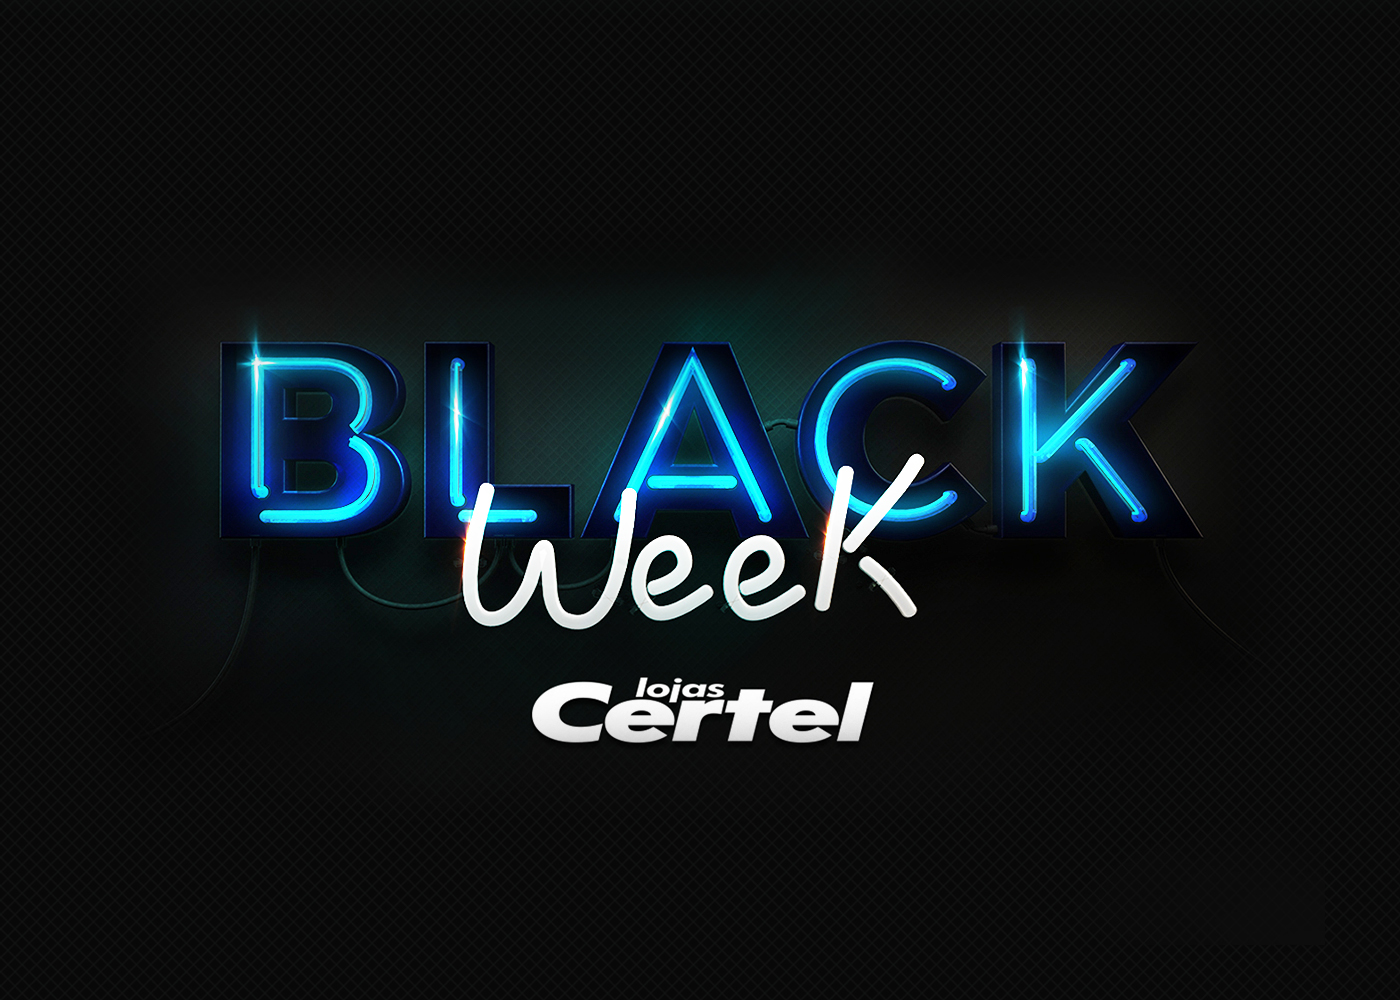 black week Friday novembro Certel Lajeado attitude loja campanha neon